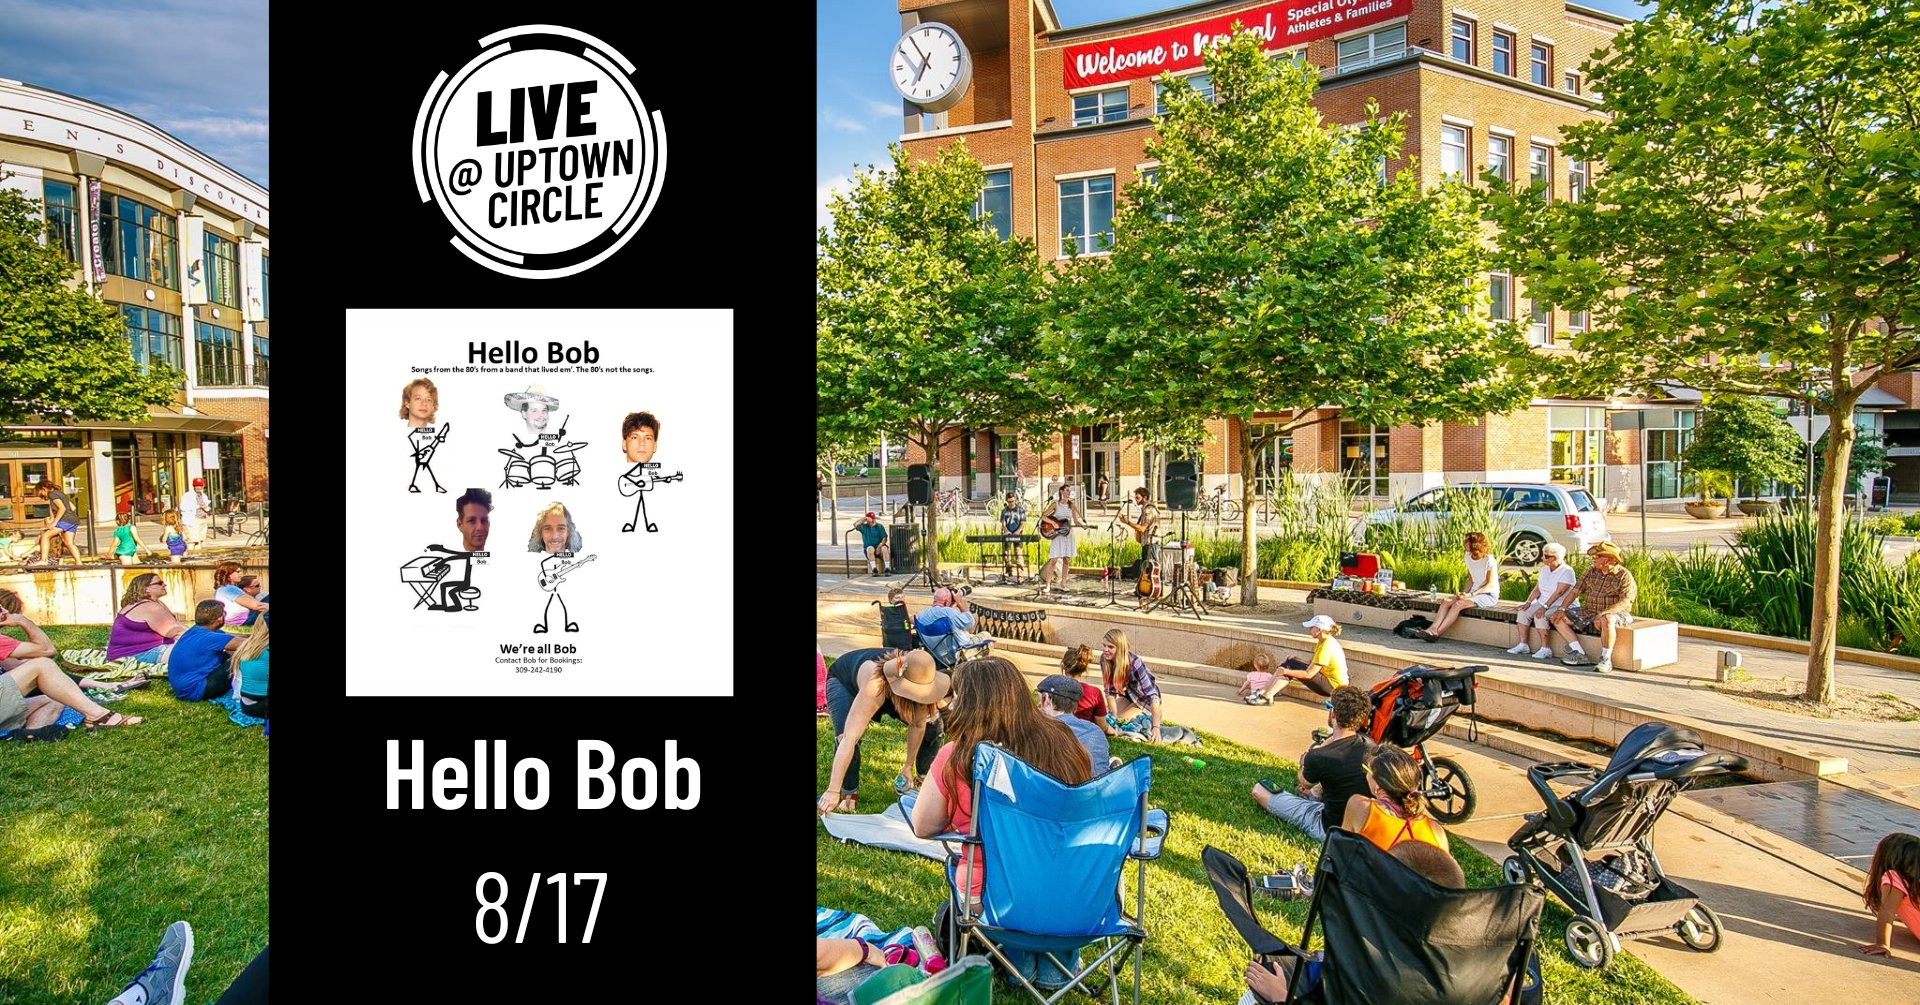 Normal LIVE presents Hello Bob @ Uptown Circle